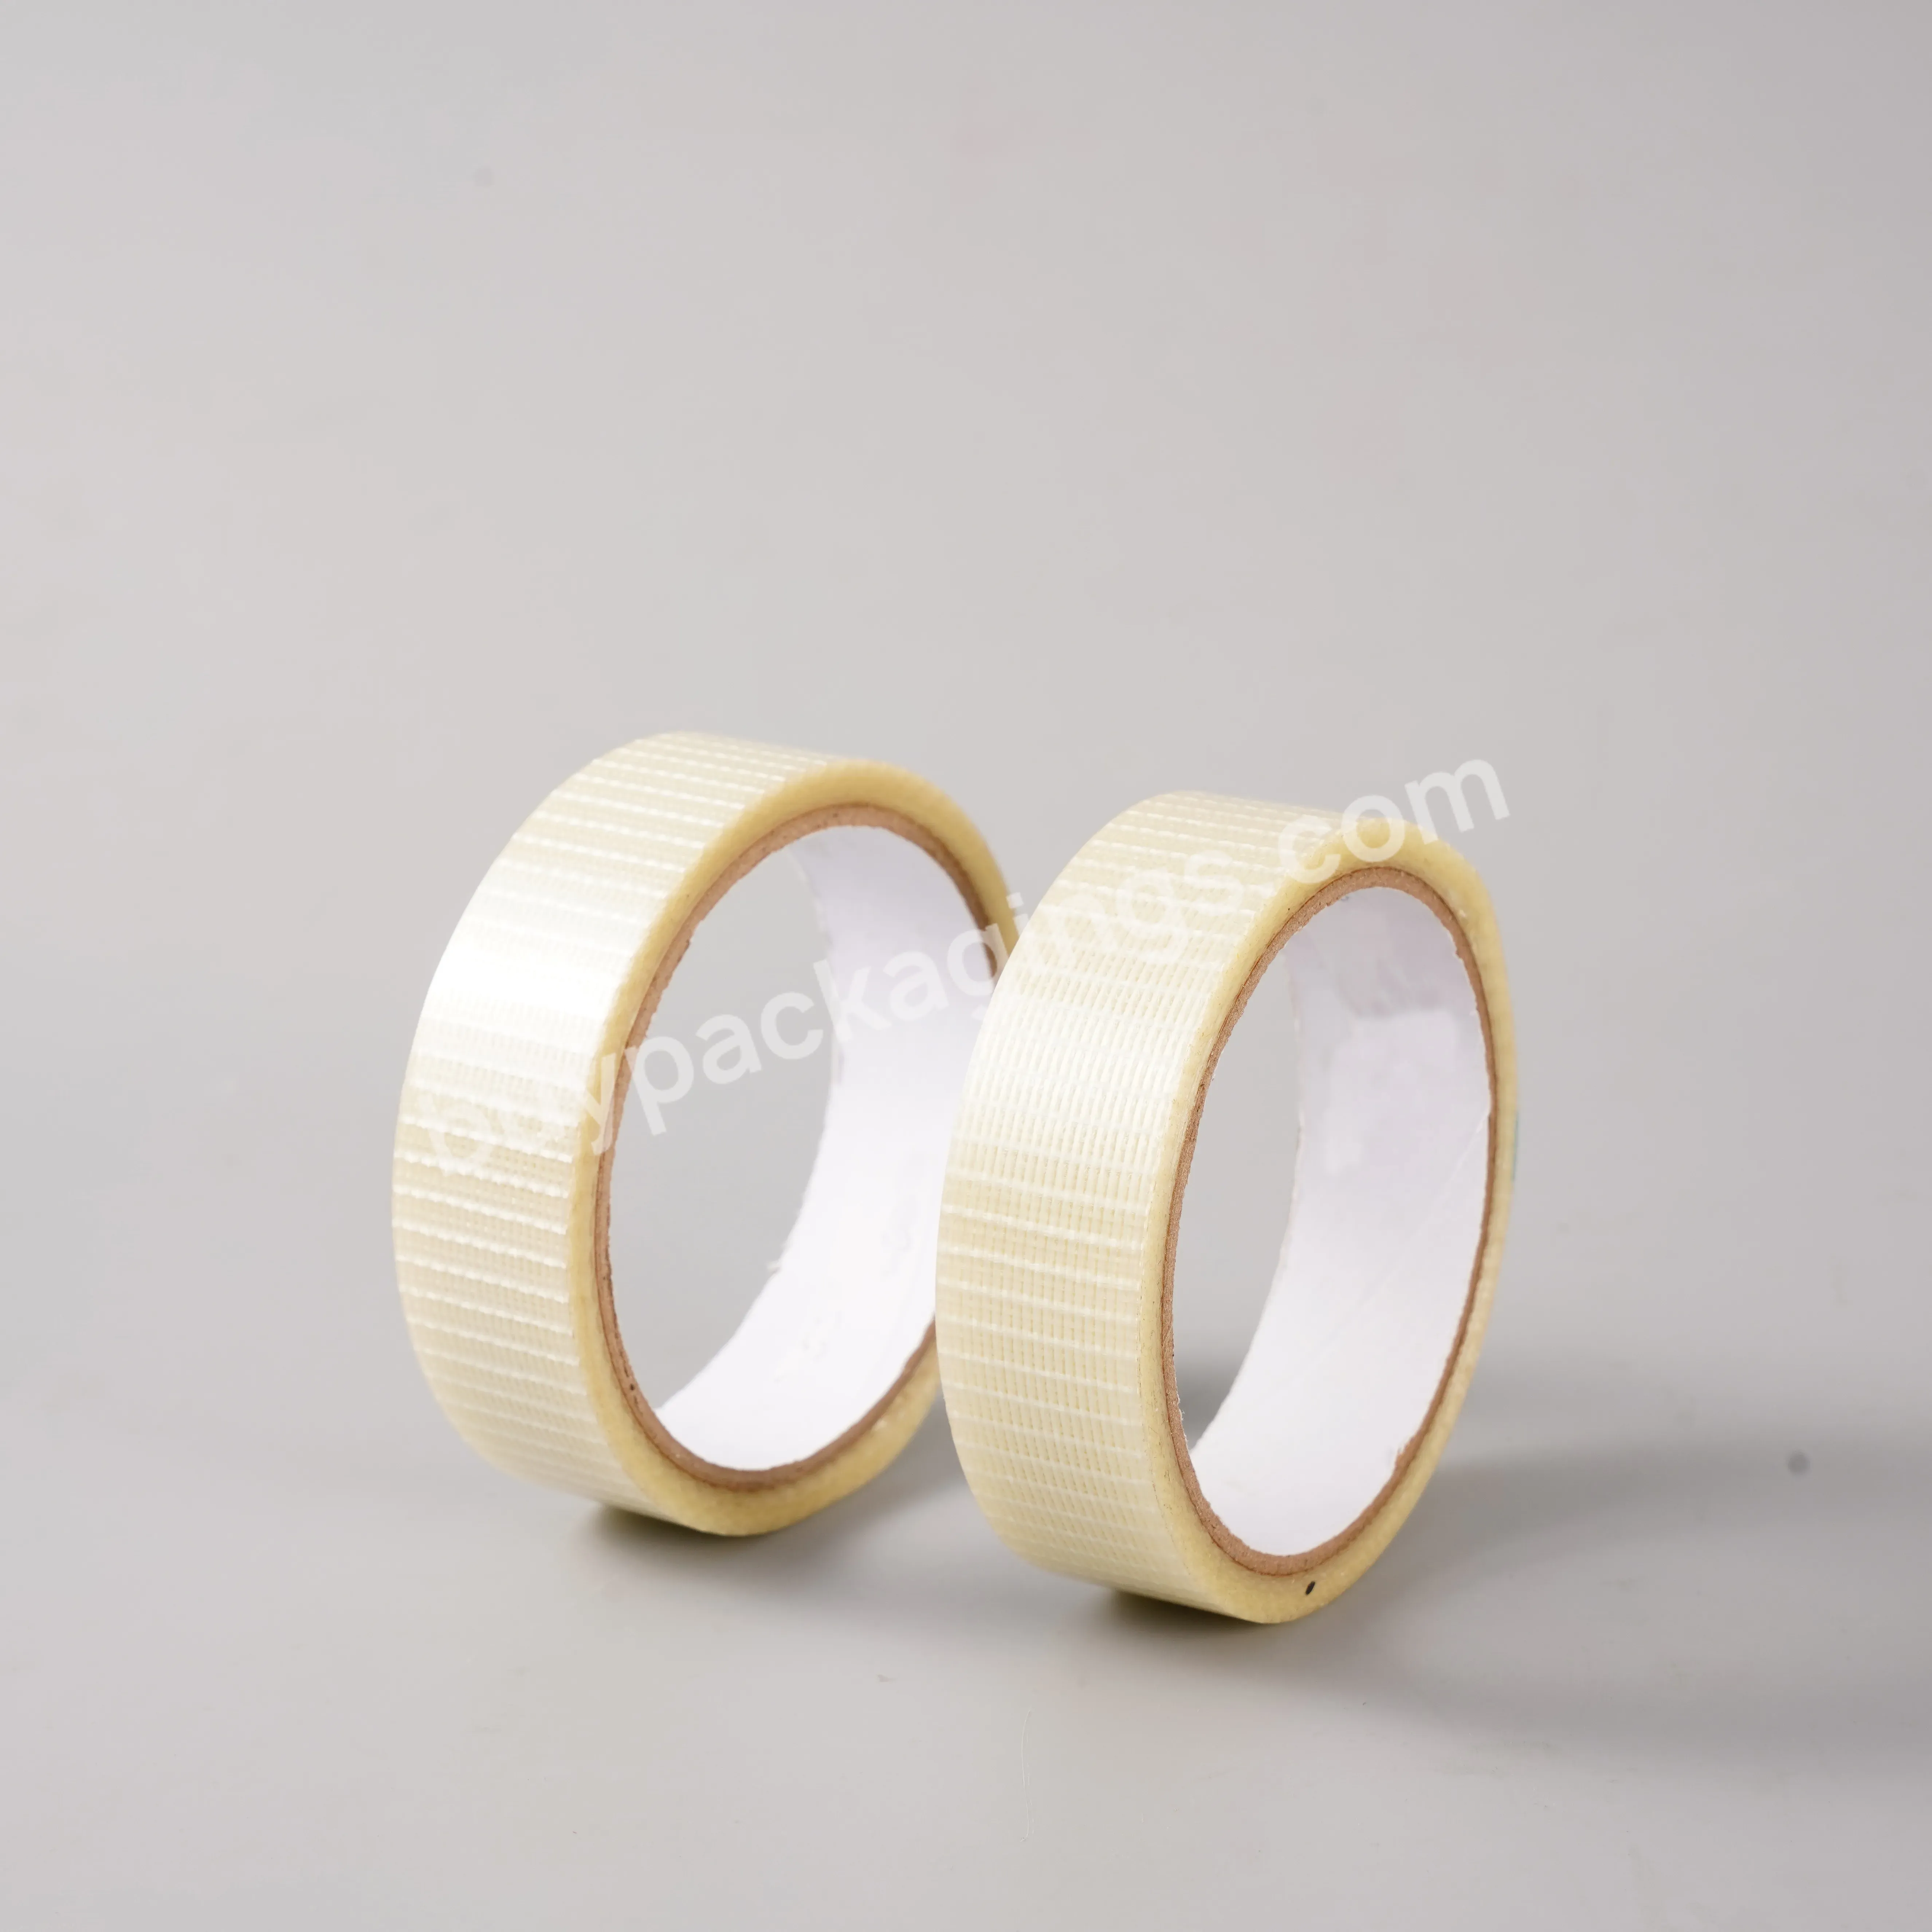 Sample Free Cross Weave Glass Fiber Tape Packing Tape For Packaging - Buy Filament Tape,Bi-directional Filament Tape,Self Adhesive Bi-directional Filament Tape.